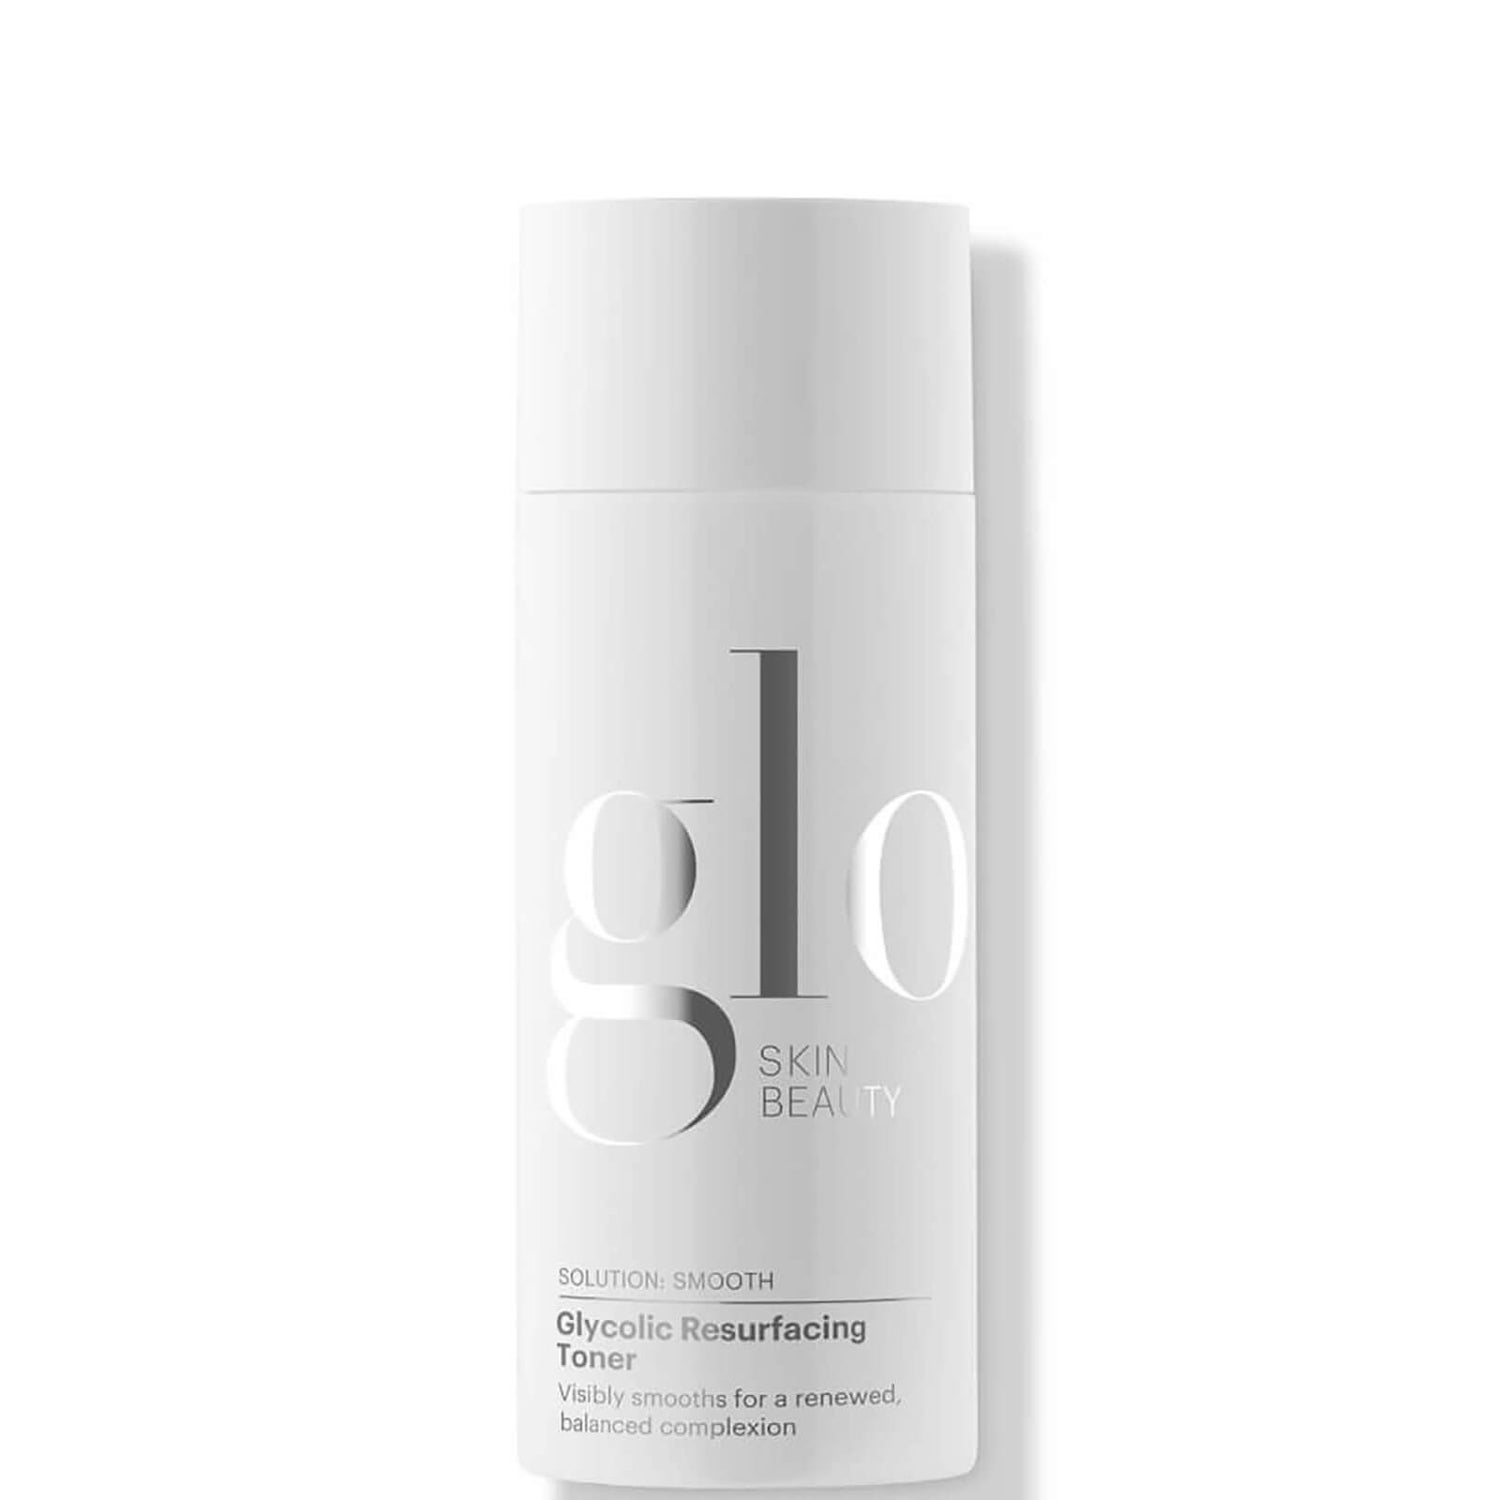 Glo Skin Beauty Glycolic Resurfacing Toner (5 fl. oz.)